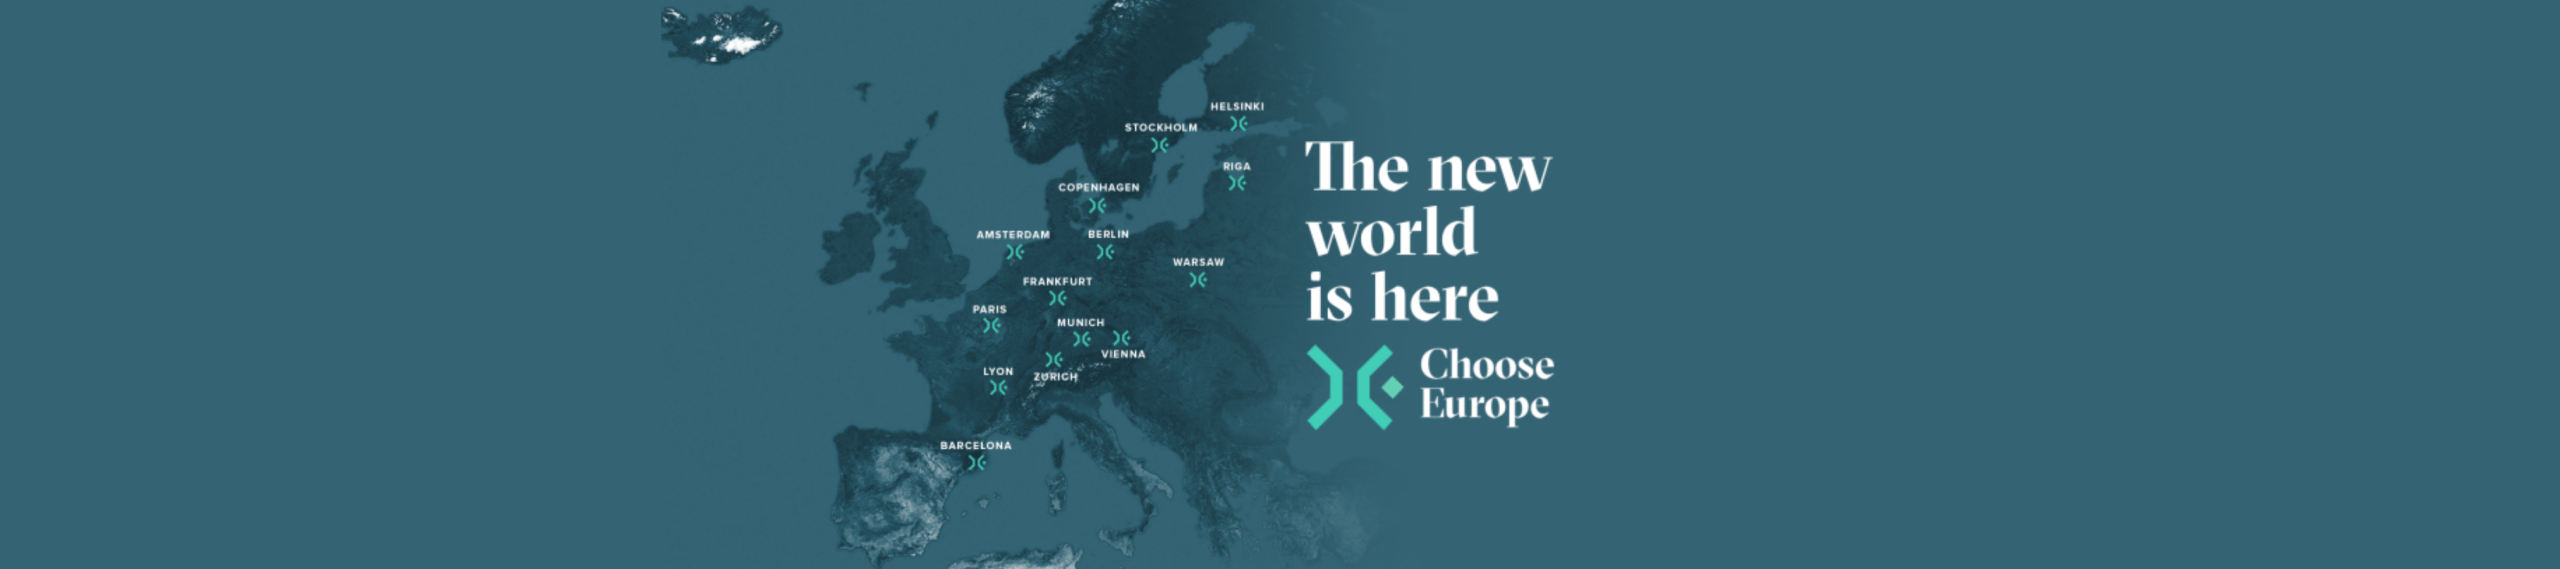 Choose Europe Header